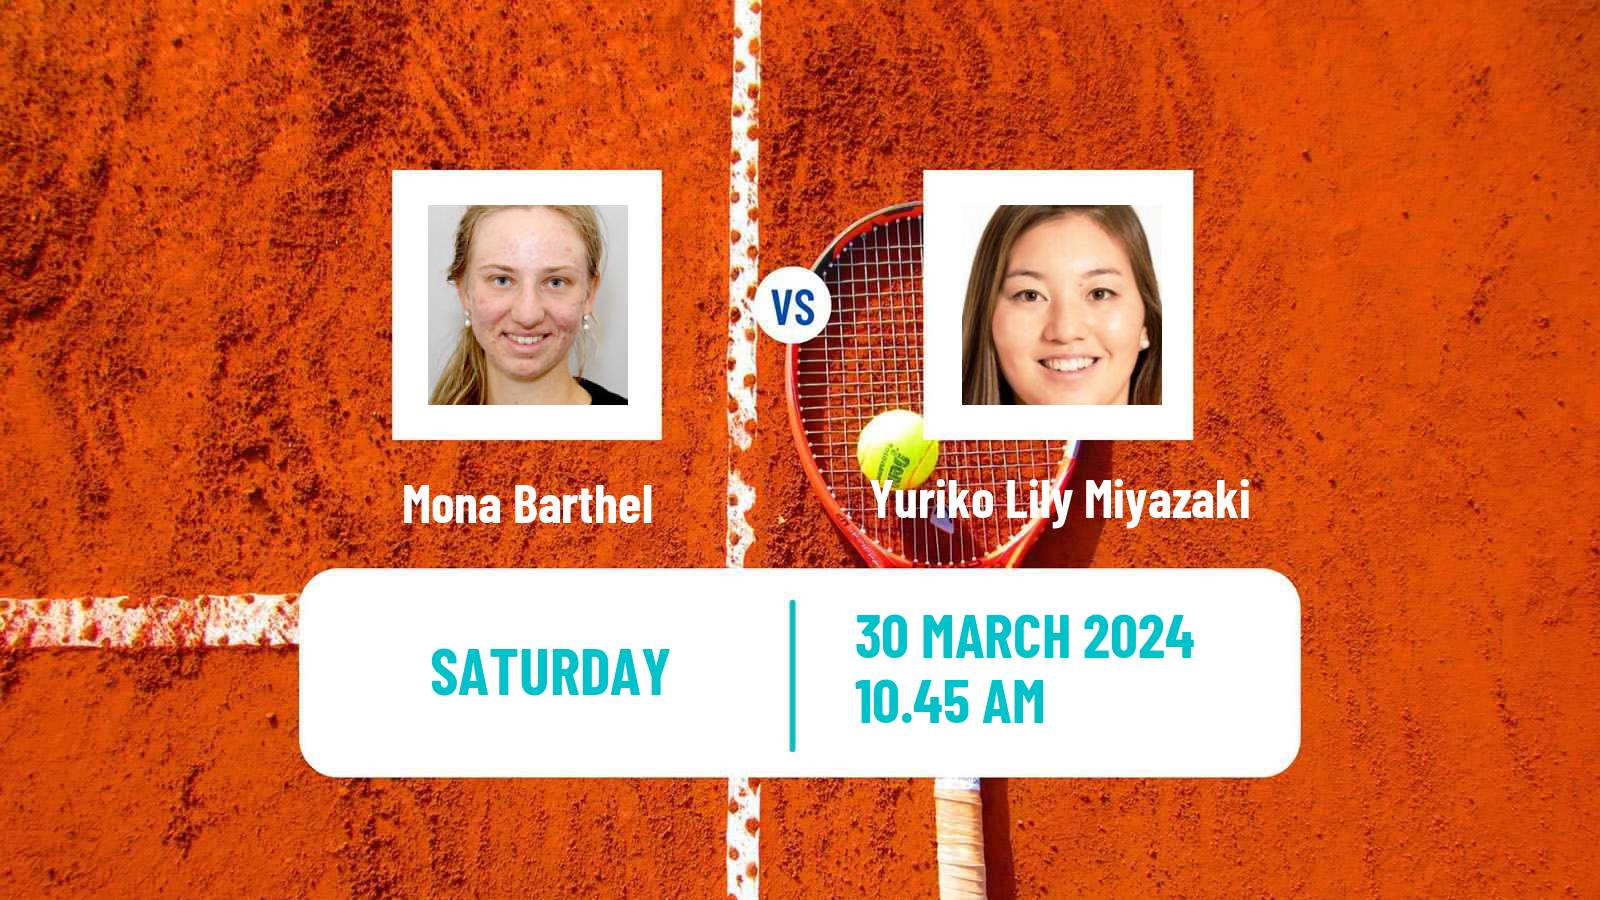 Tennis ITF W75 Croissy Beaubourg Women Mona Barthel - Yuriko Lily Miyazaki